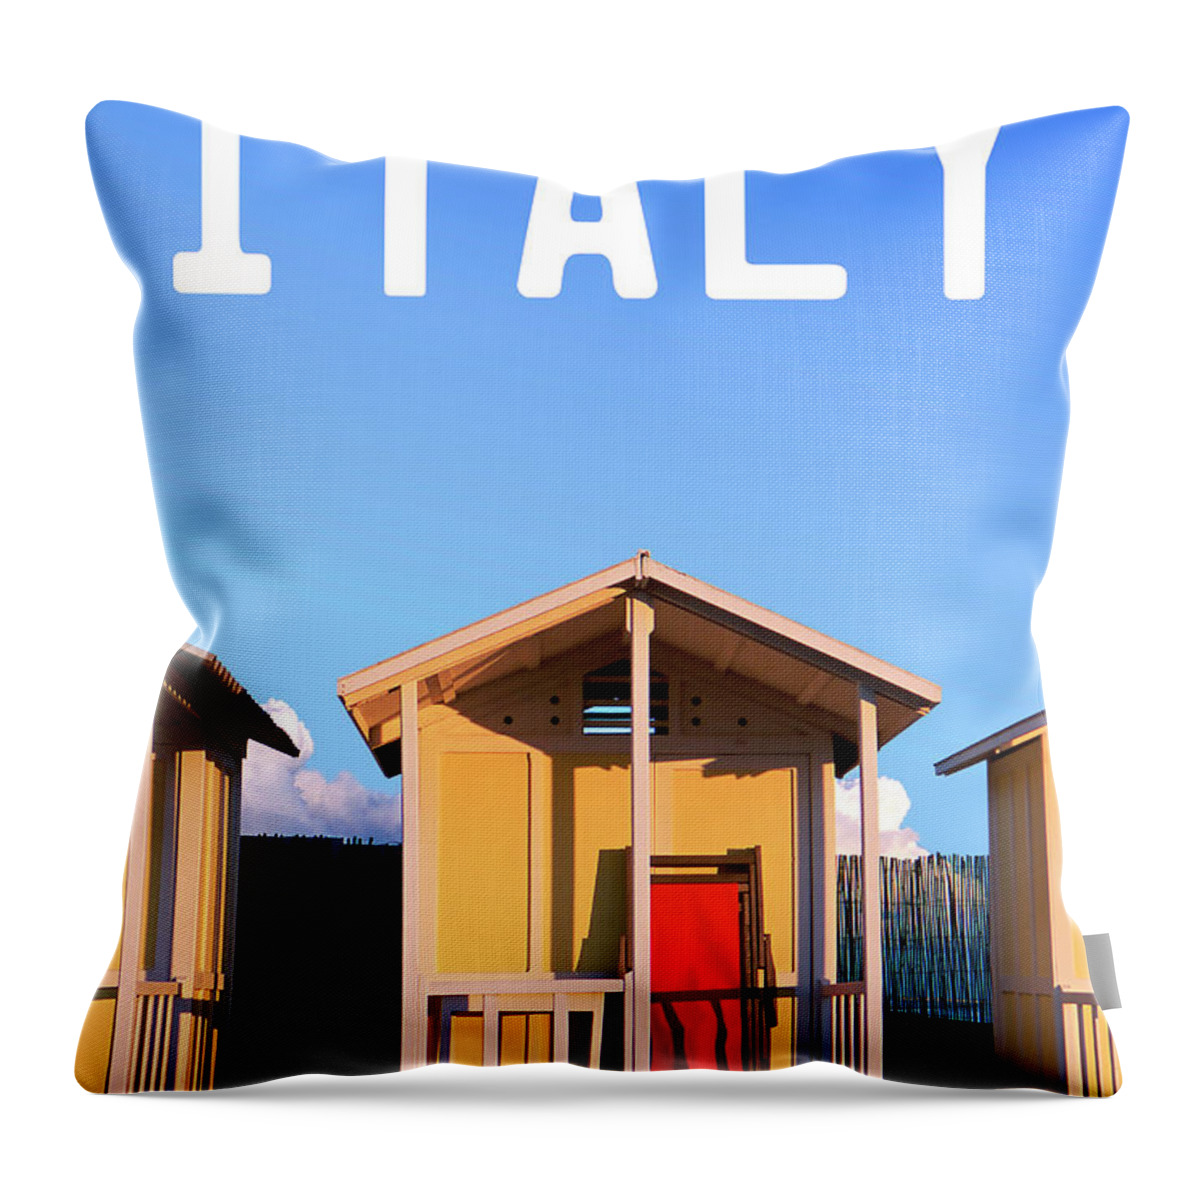 Italy Throw Pillow featuring the photograph Italy, Lazio, Ostia by John Seaton Callahan